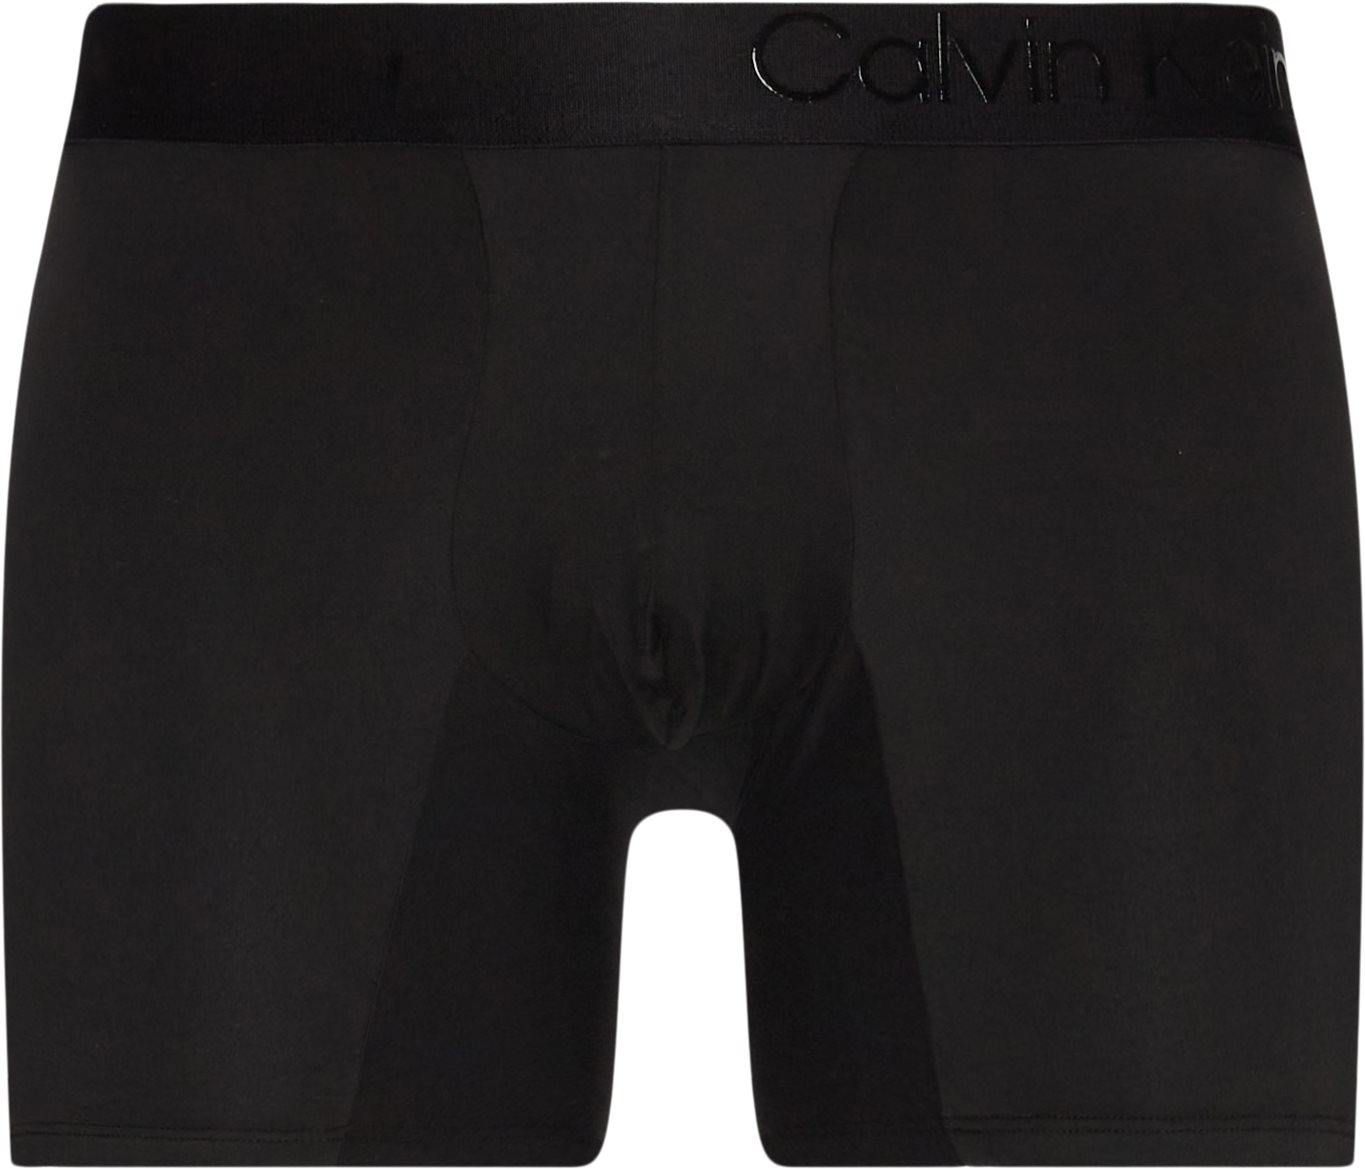 000nb2918aub1 Undertøj - Underwear - Black